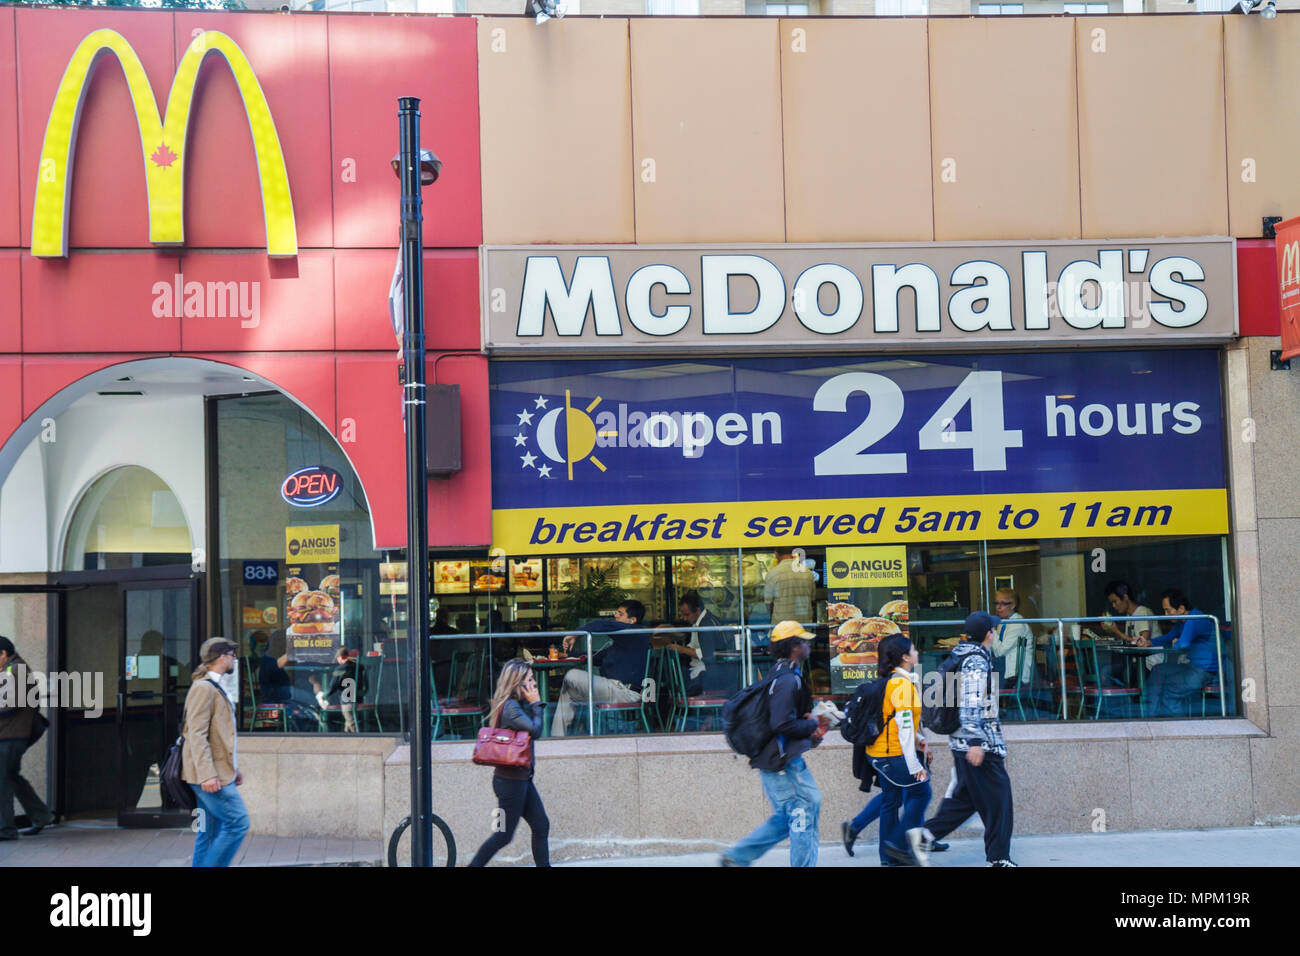 Toronto Canada,Yonge Street,McDonald's,burgers,hamburgers,fast food,restaurant restaurants dining cafe cafes,dining,chain,global company,hamburgers,go Stock Photo